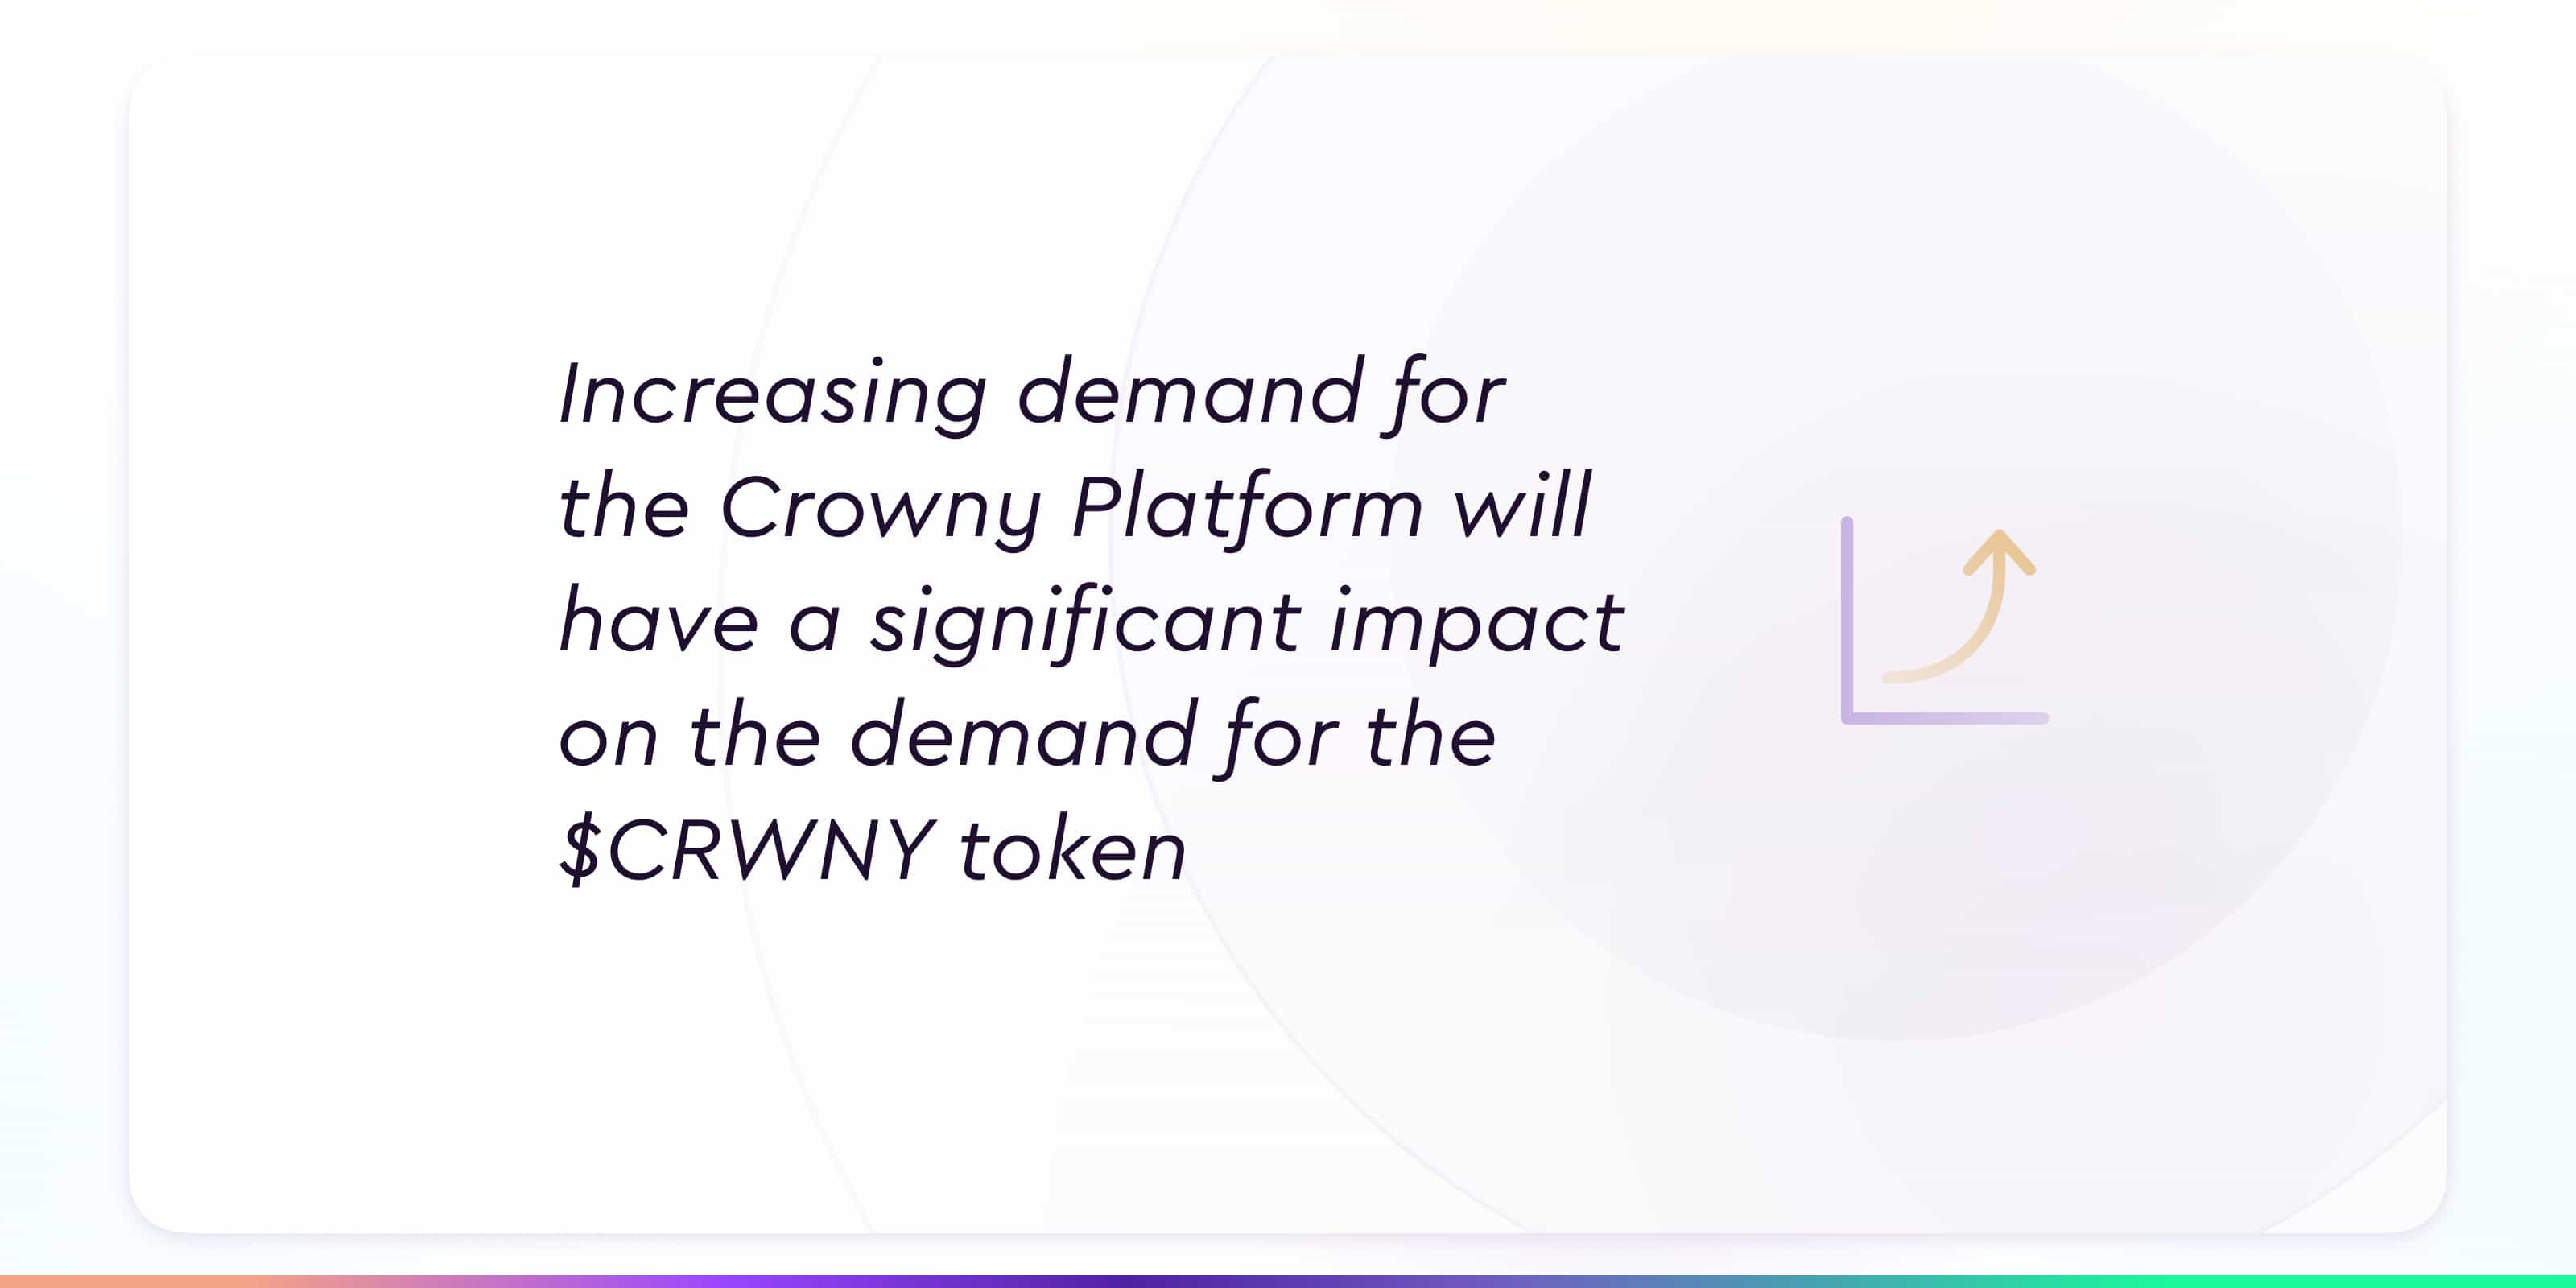 Demand for Crowny Platform means demand for $CRWNY